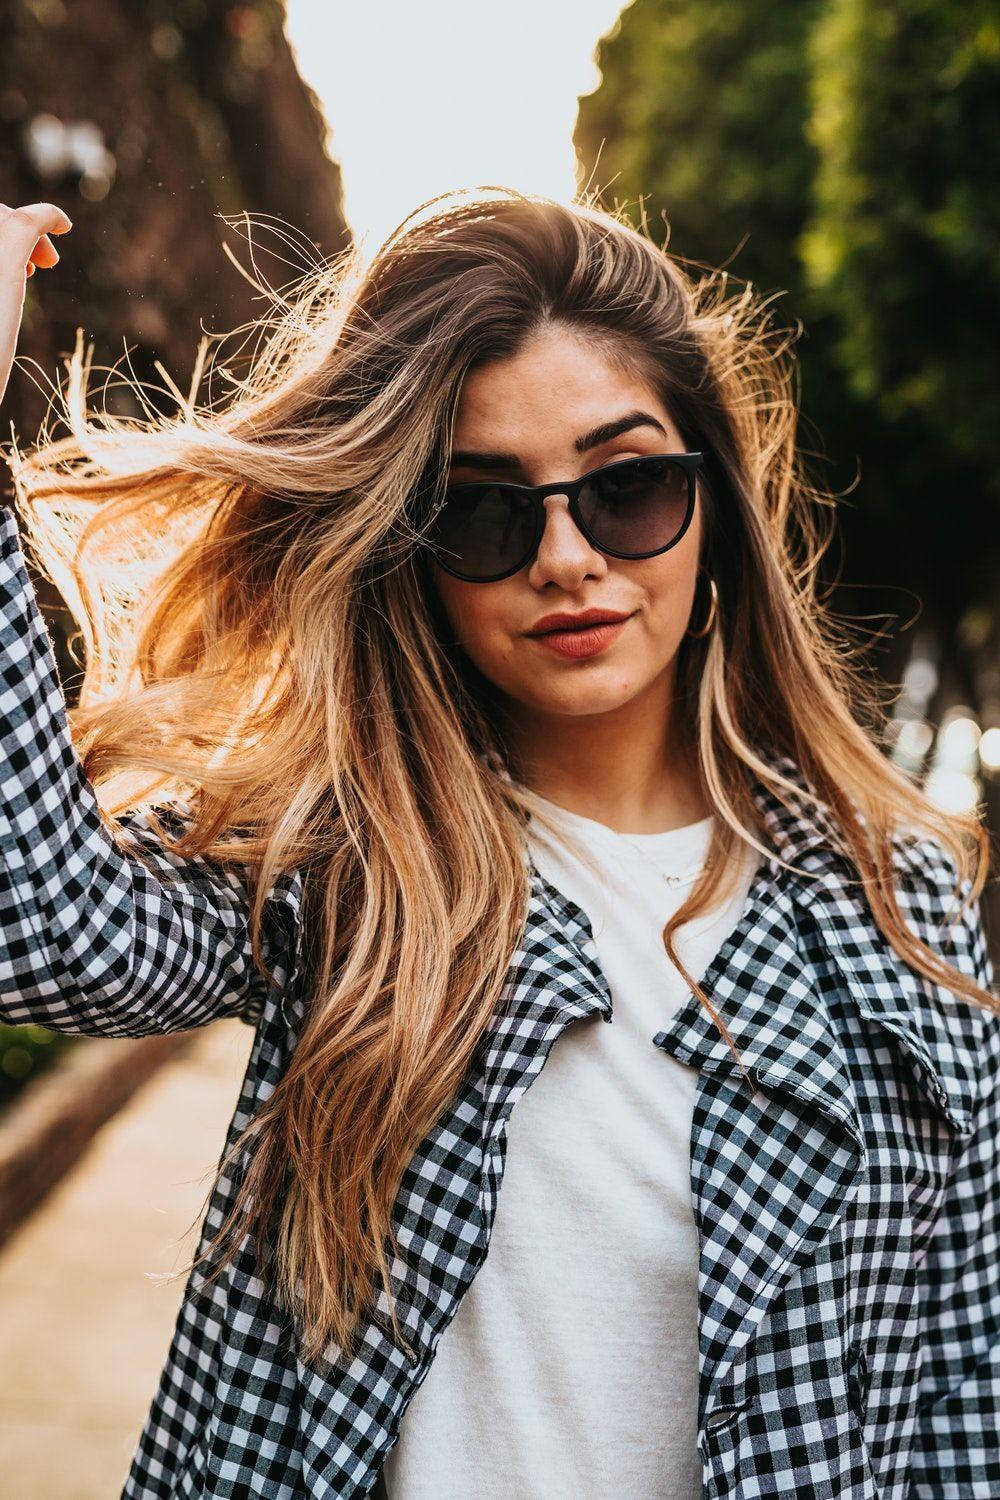 Download Blonde Attitude Girl With Sunglasses Wallpaper 